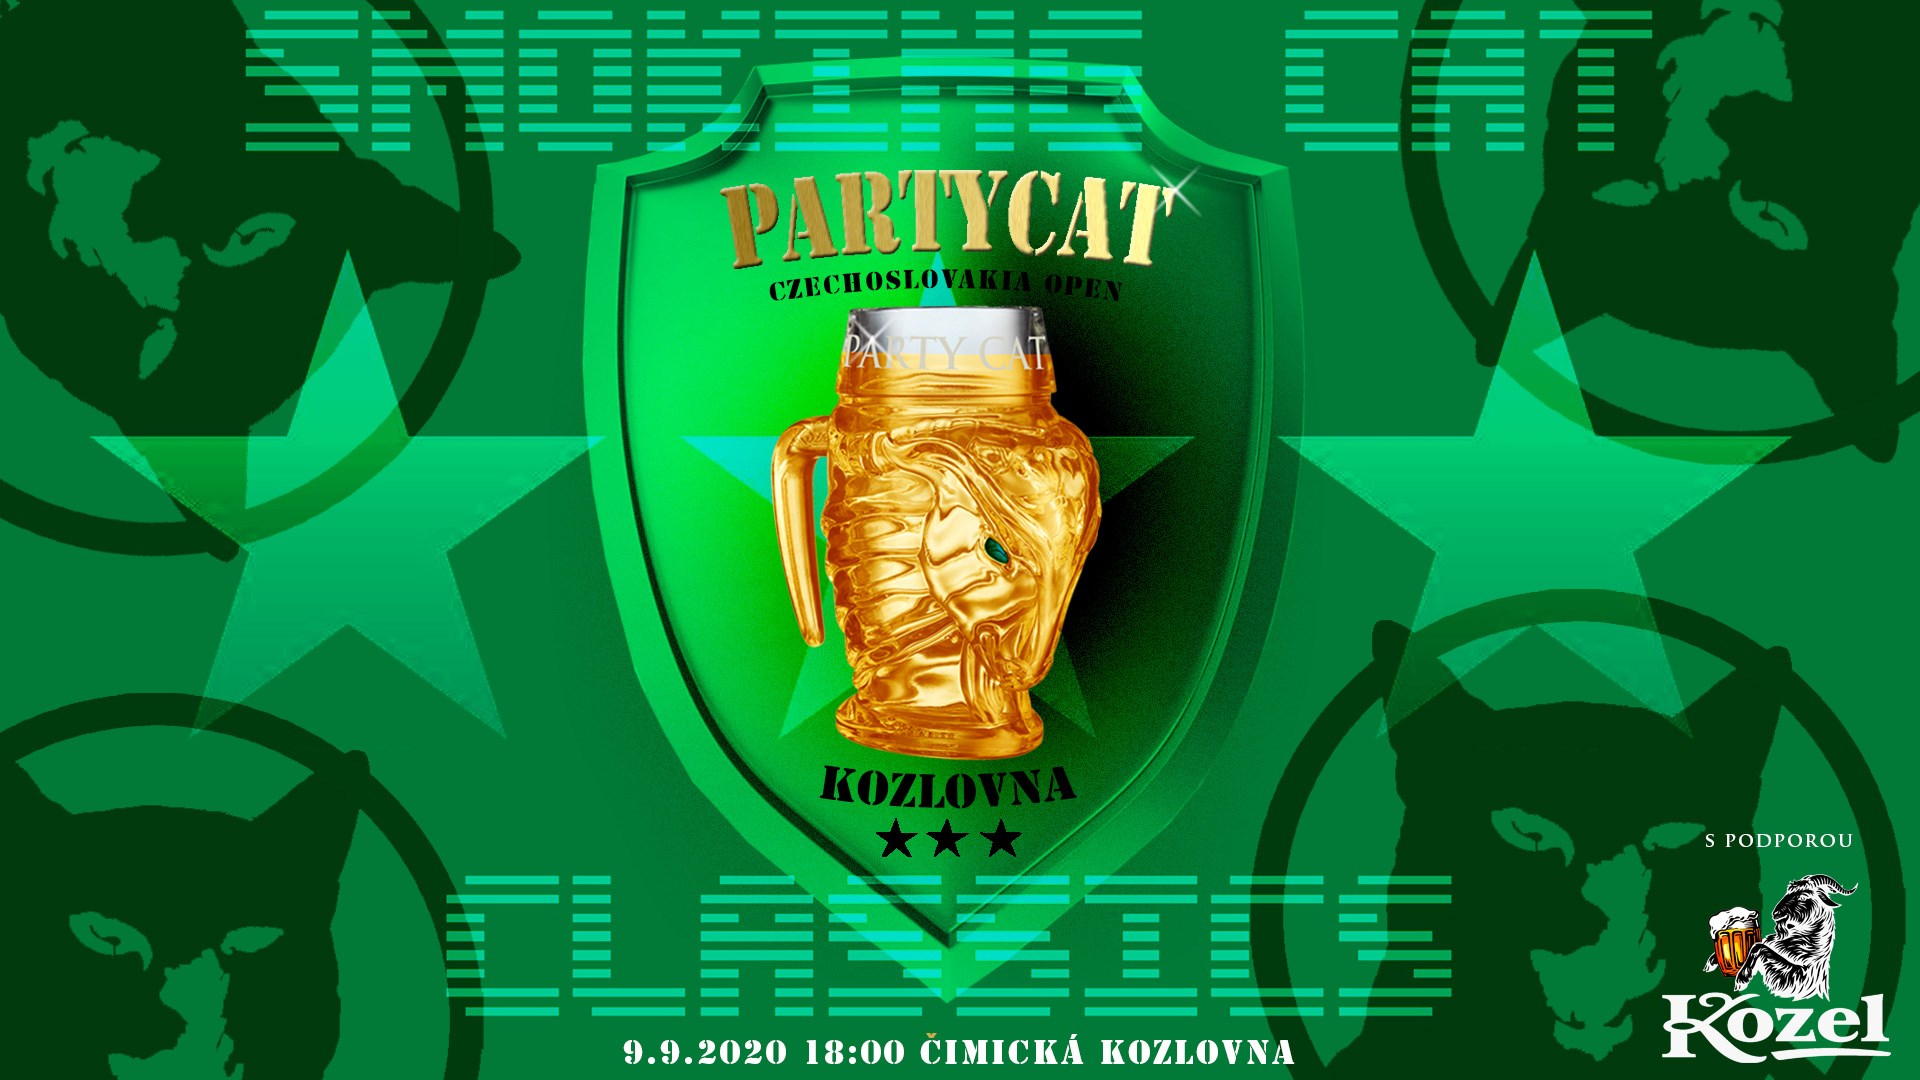 Smoking Cat Party Cat CzechoSlovak Open 2020